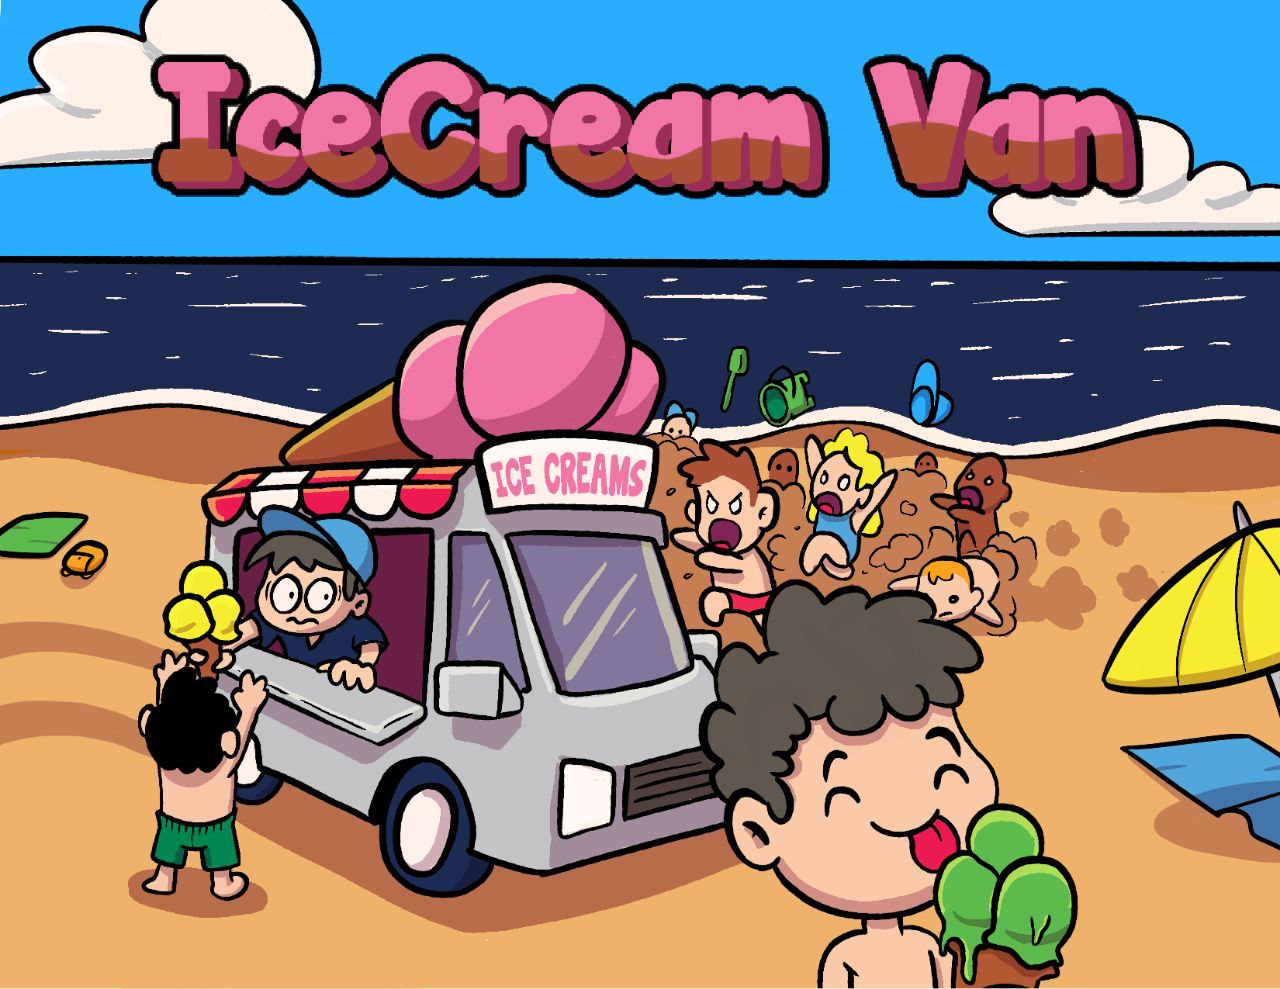 Play Bad Ice Cream 5 Game HTML5 on